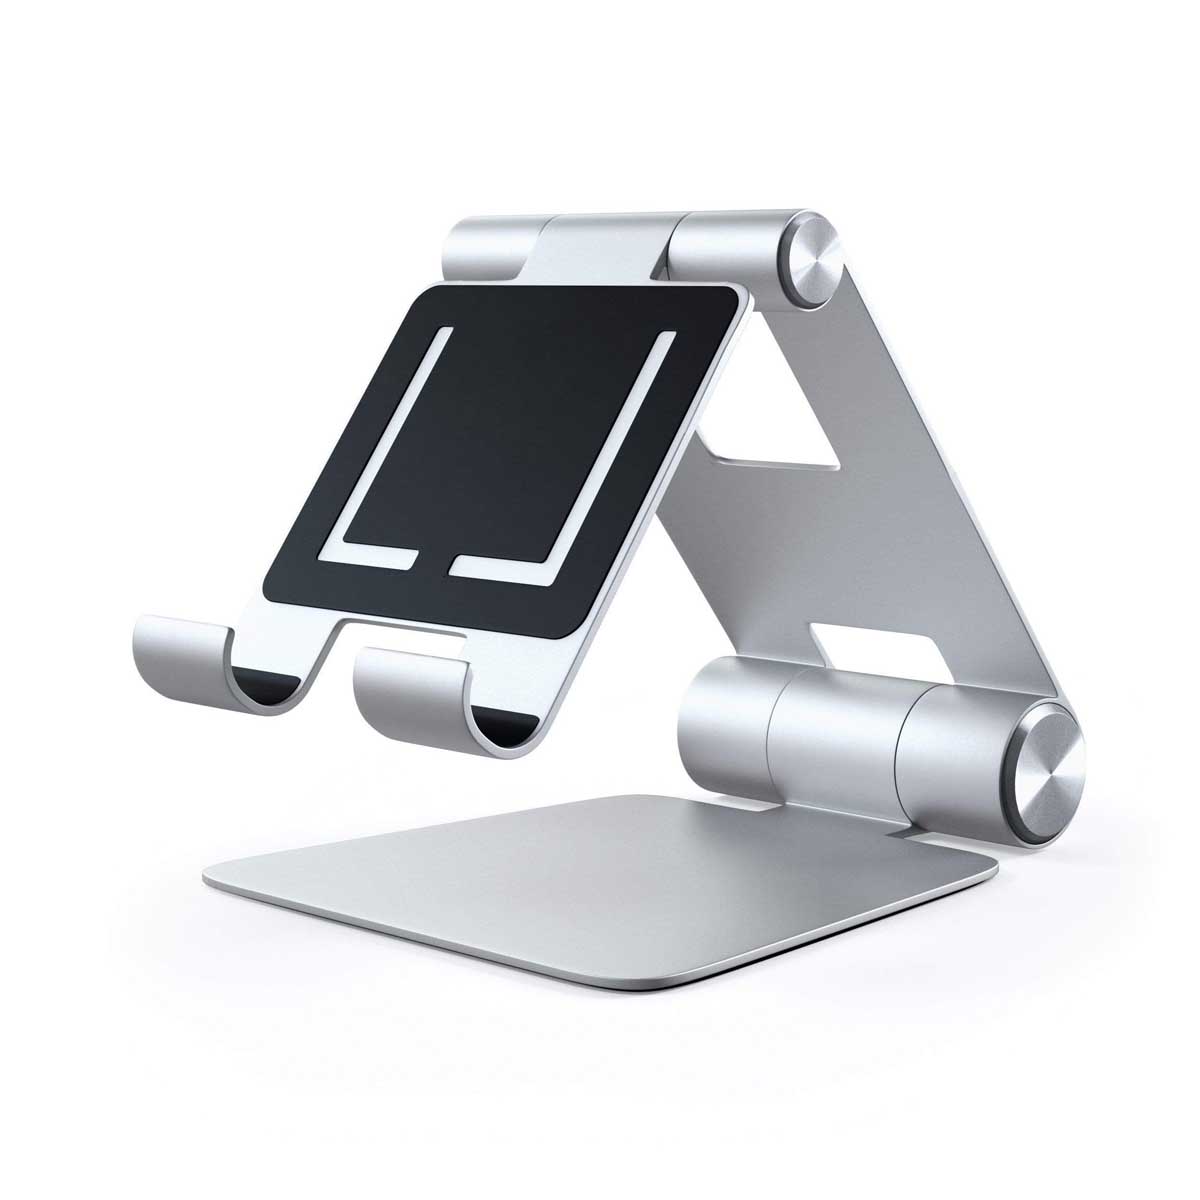 Giá đỡ Satechi R1 Aluminum Hinge Holder Foldable Stand cho iPad/Smartphone